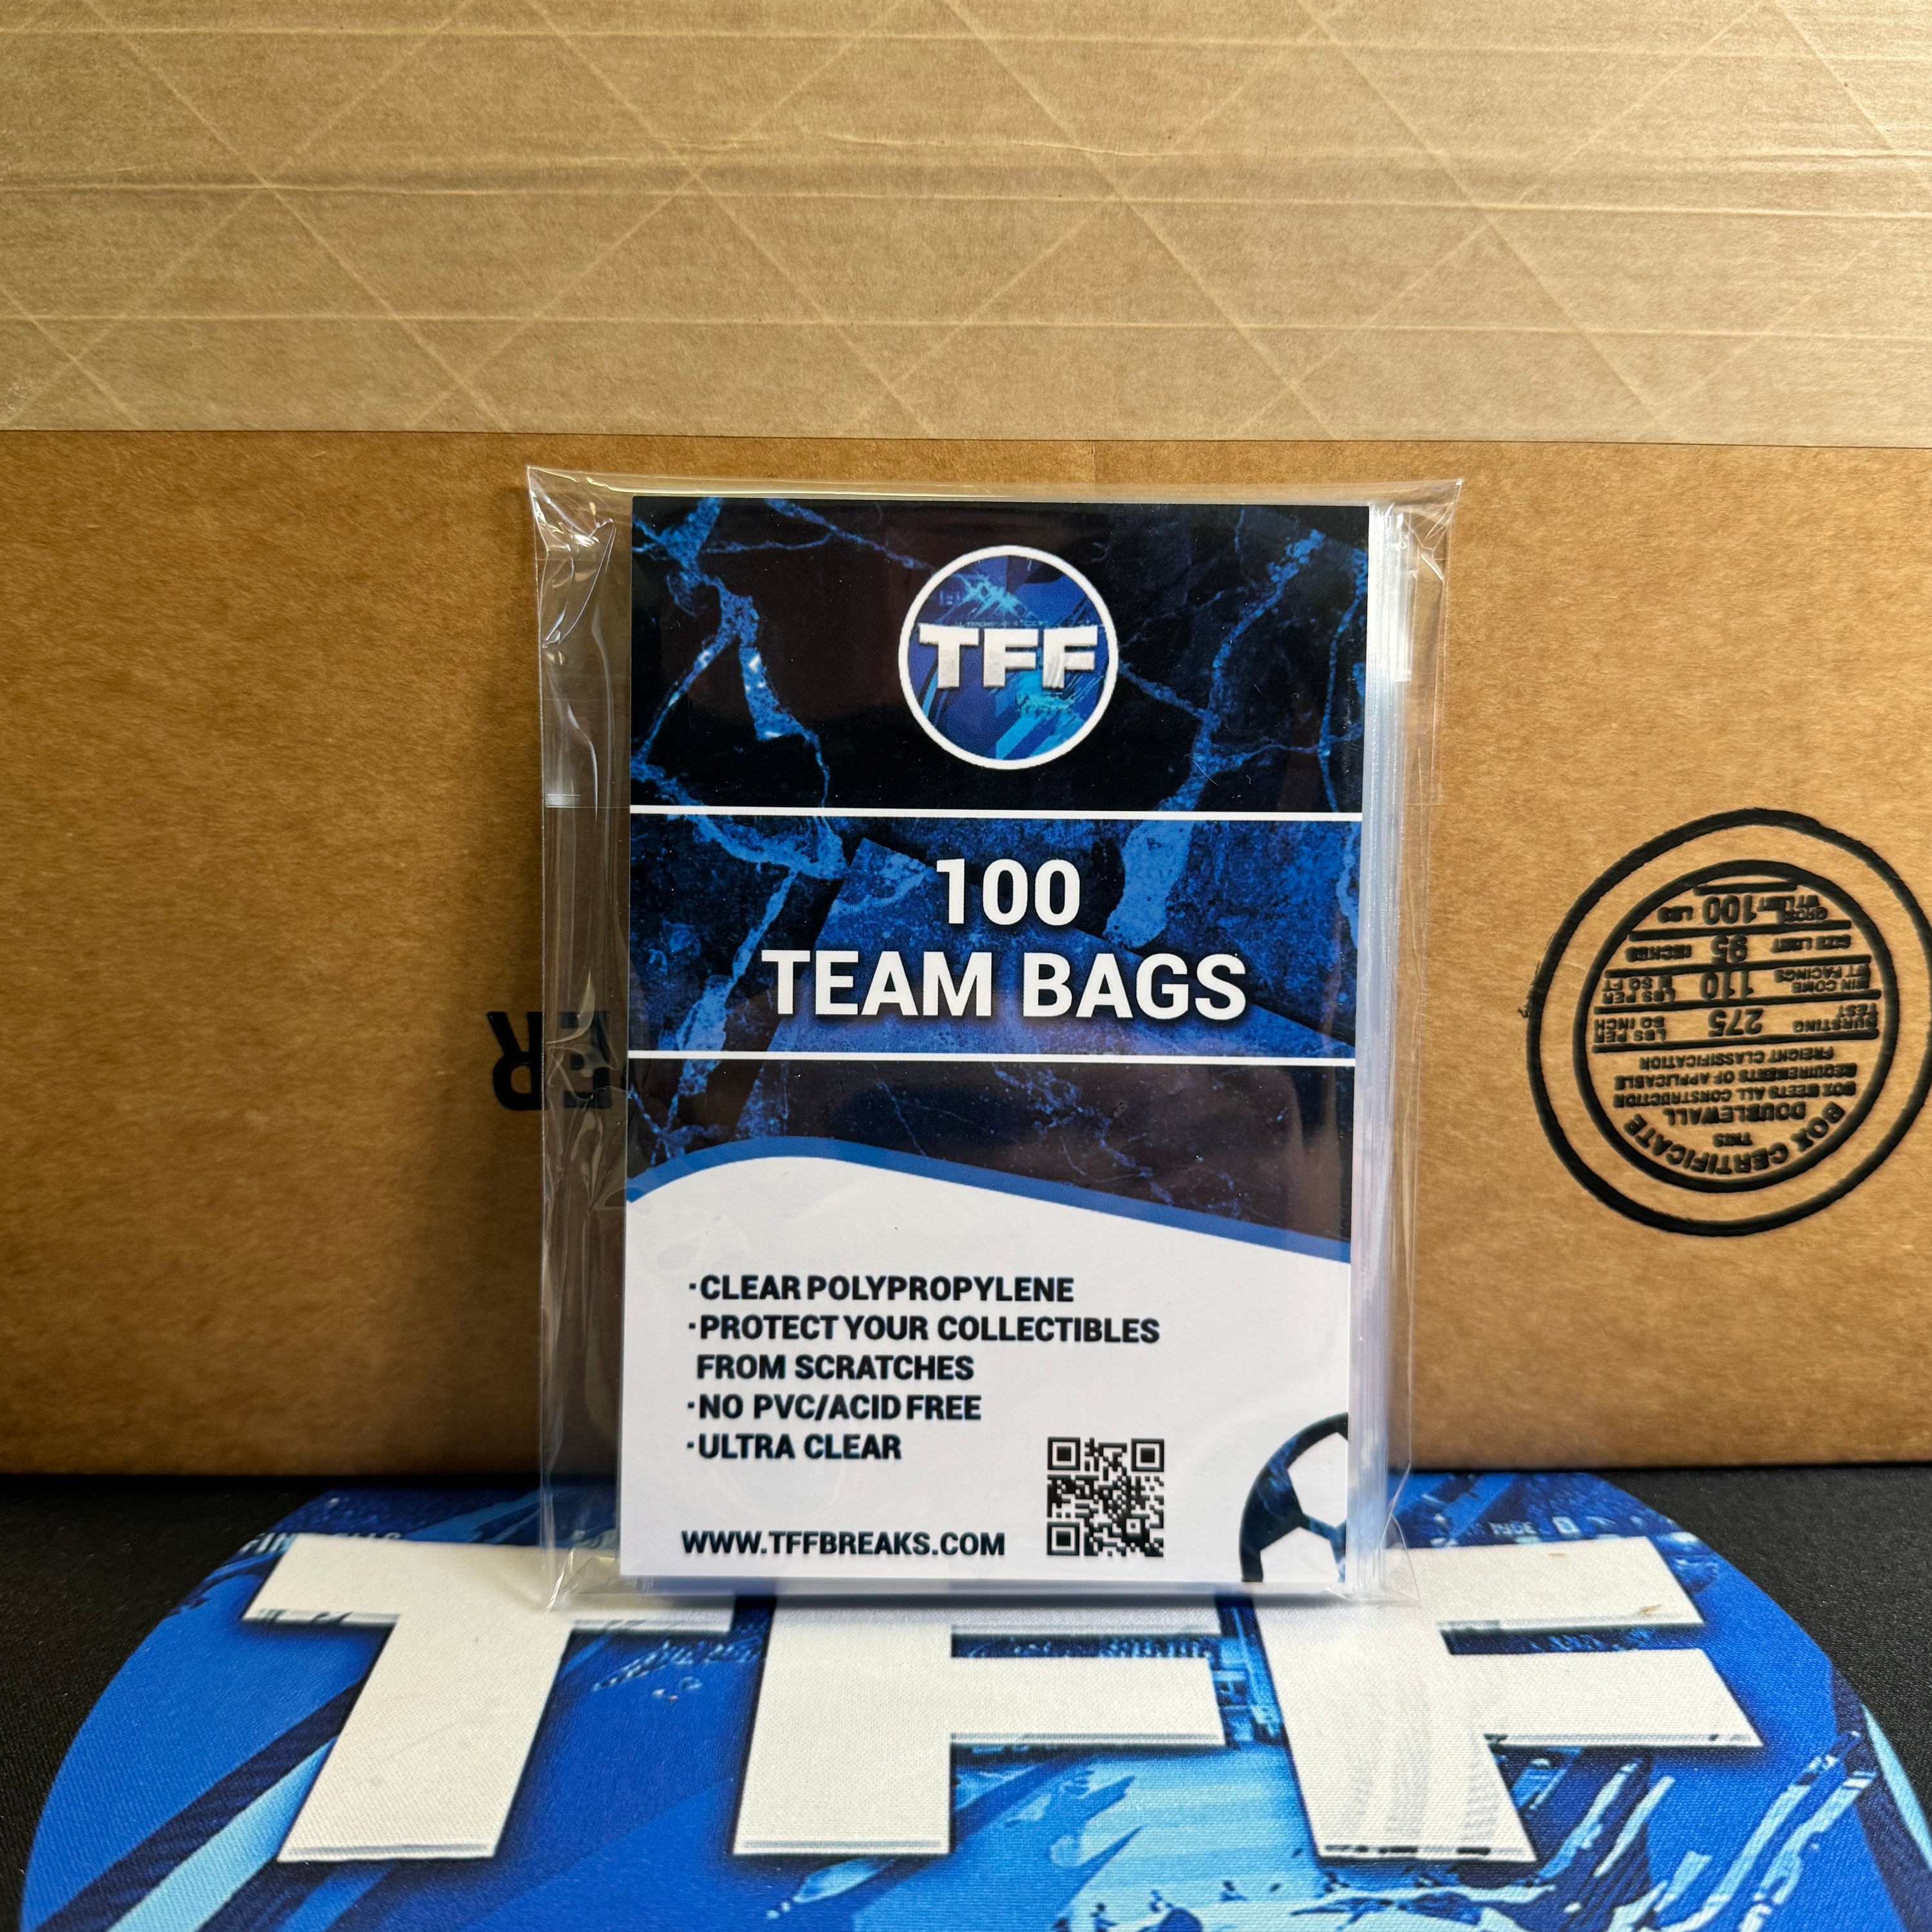 TFF BREAKS PREMIUM RESEALABLE TEAM BAGS 100 PACKS CASE (10000 TEAM BAGS)